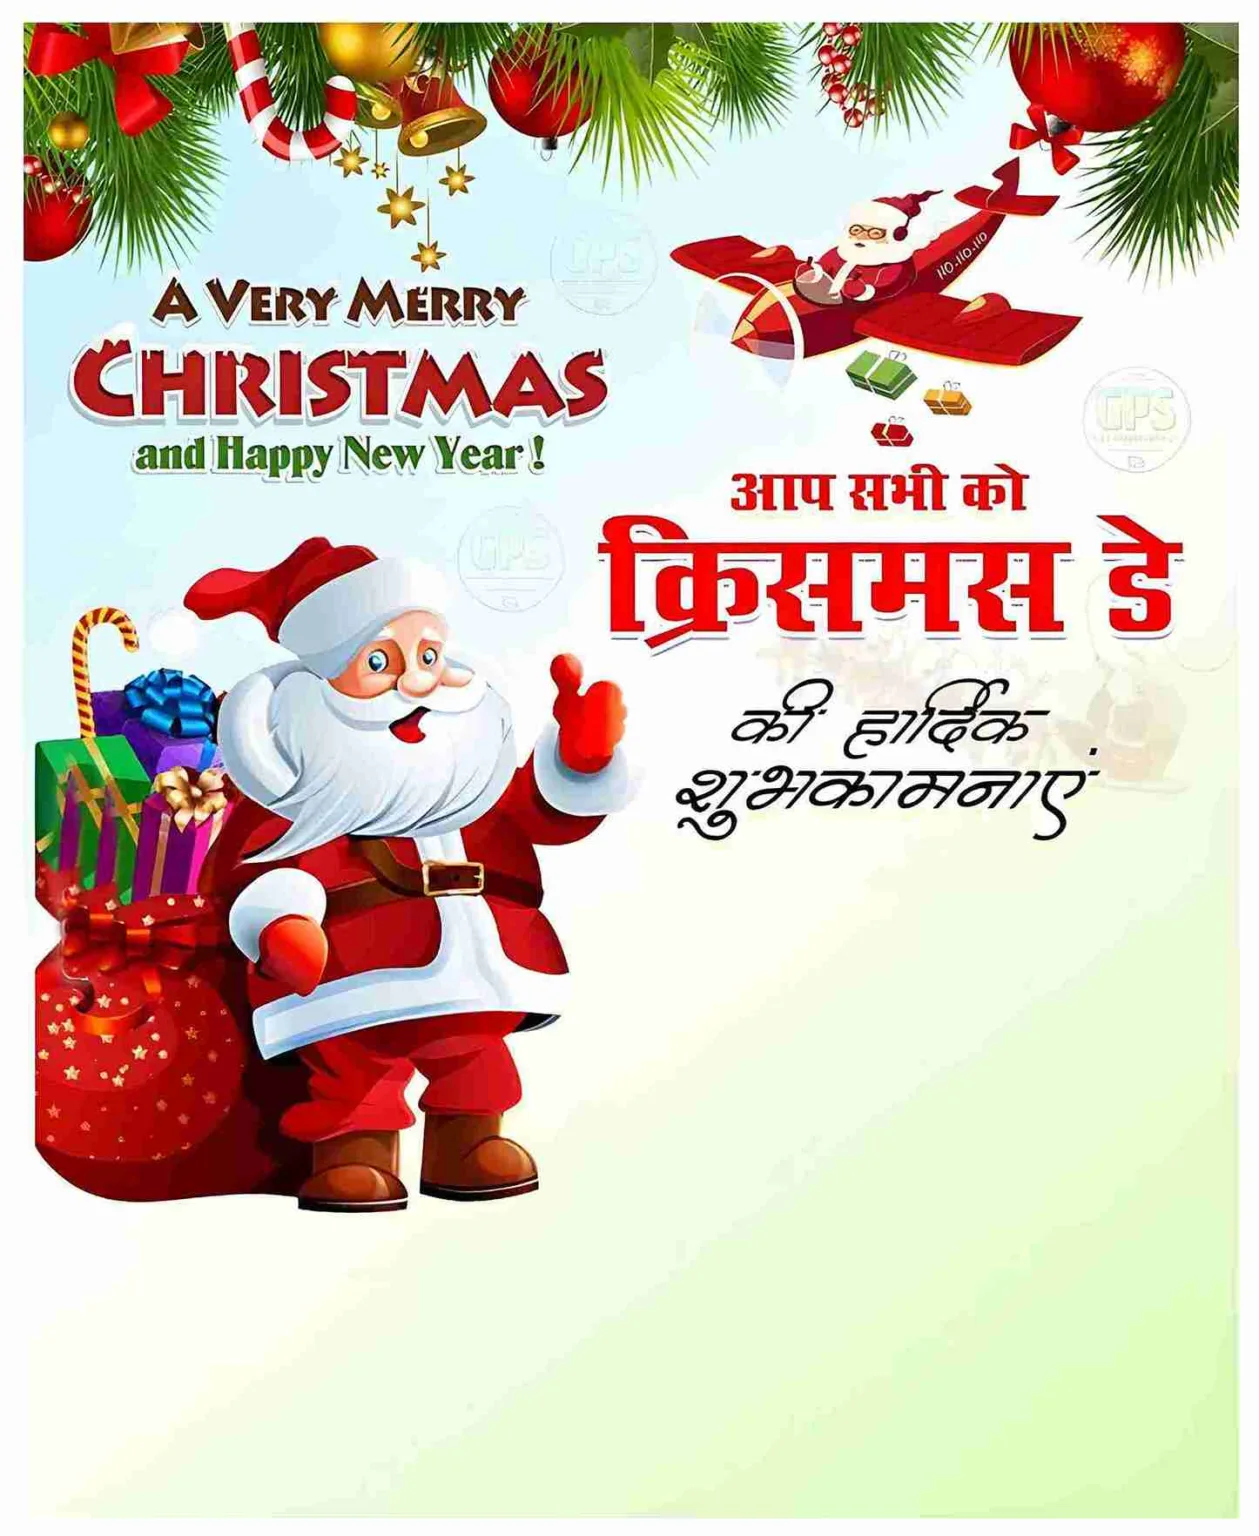 Merry Christmas Banner Hd in Hindi